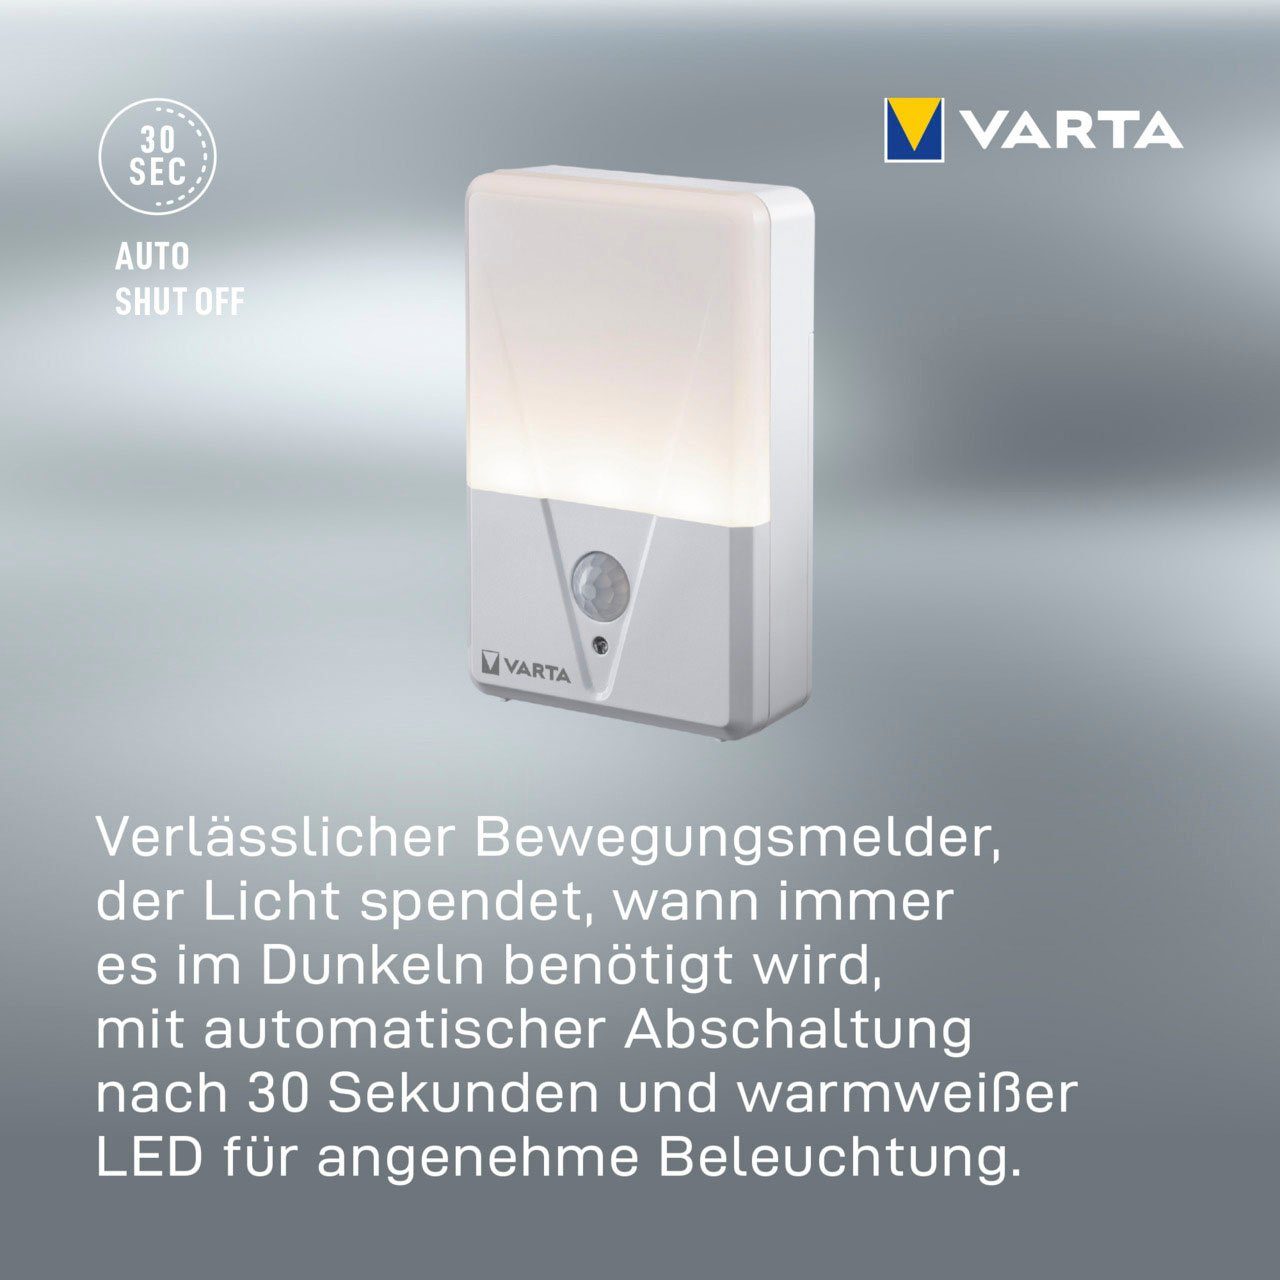 VARTA Nachtlicht VARTA Motion Sensor fest batteriebetrieben Warmweiß inkl. 3xAAA, integriert, ist LED Nachtlicht